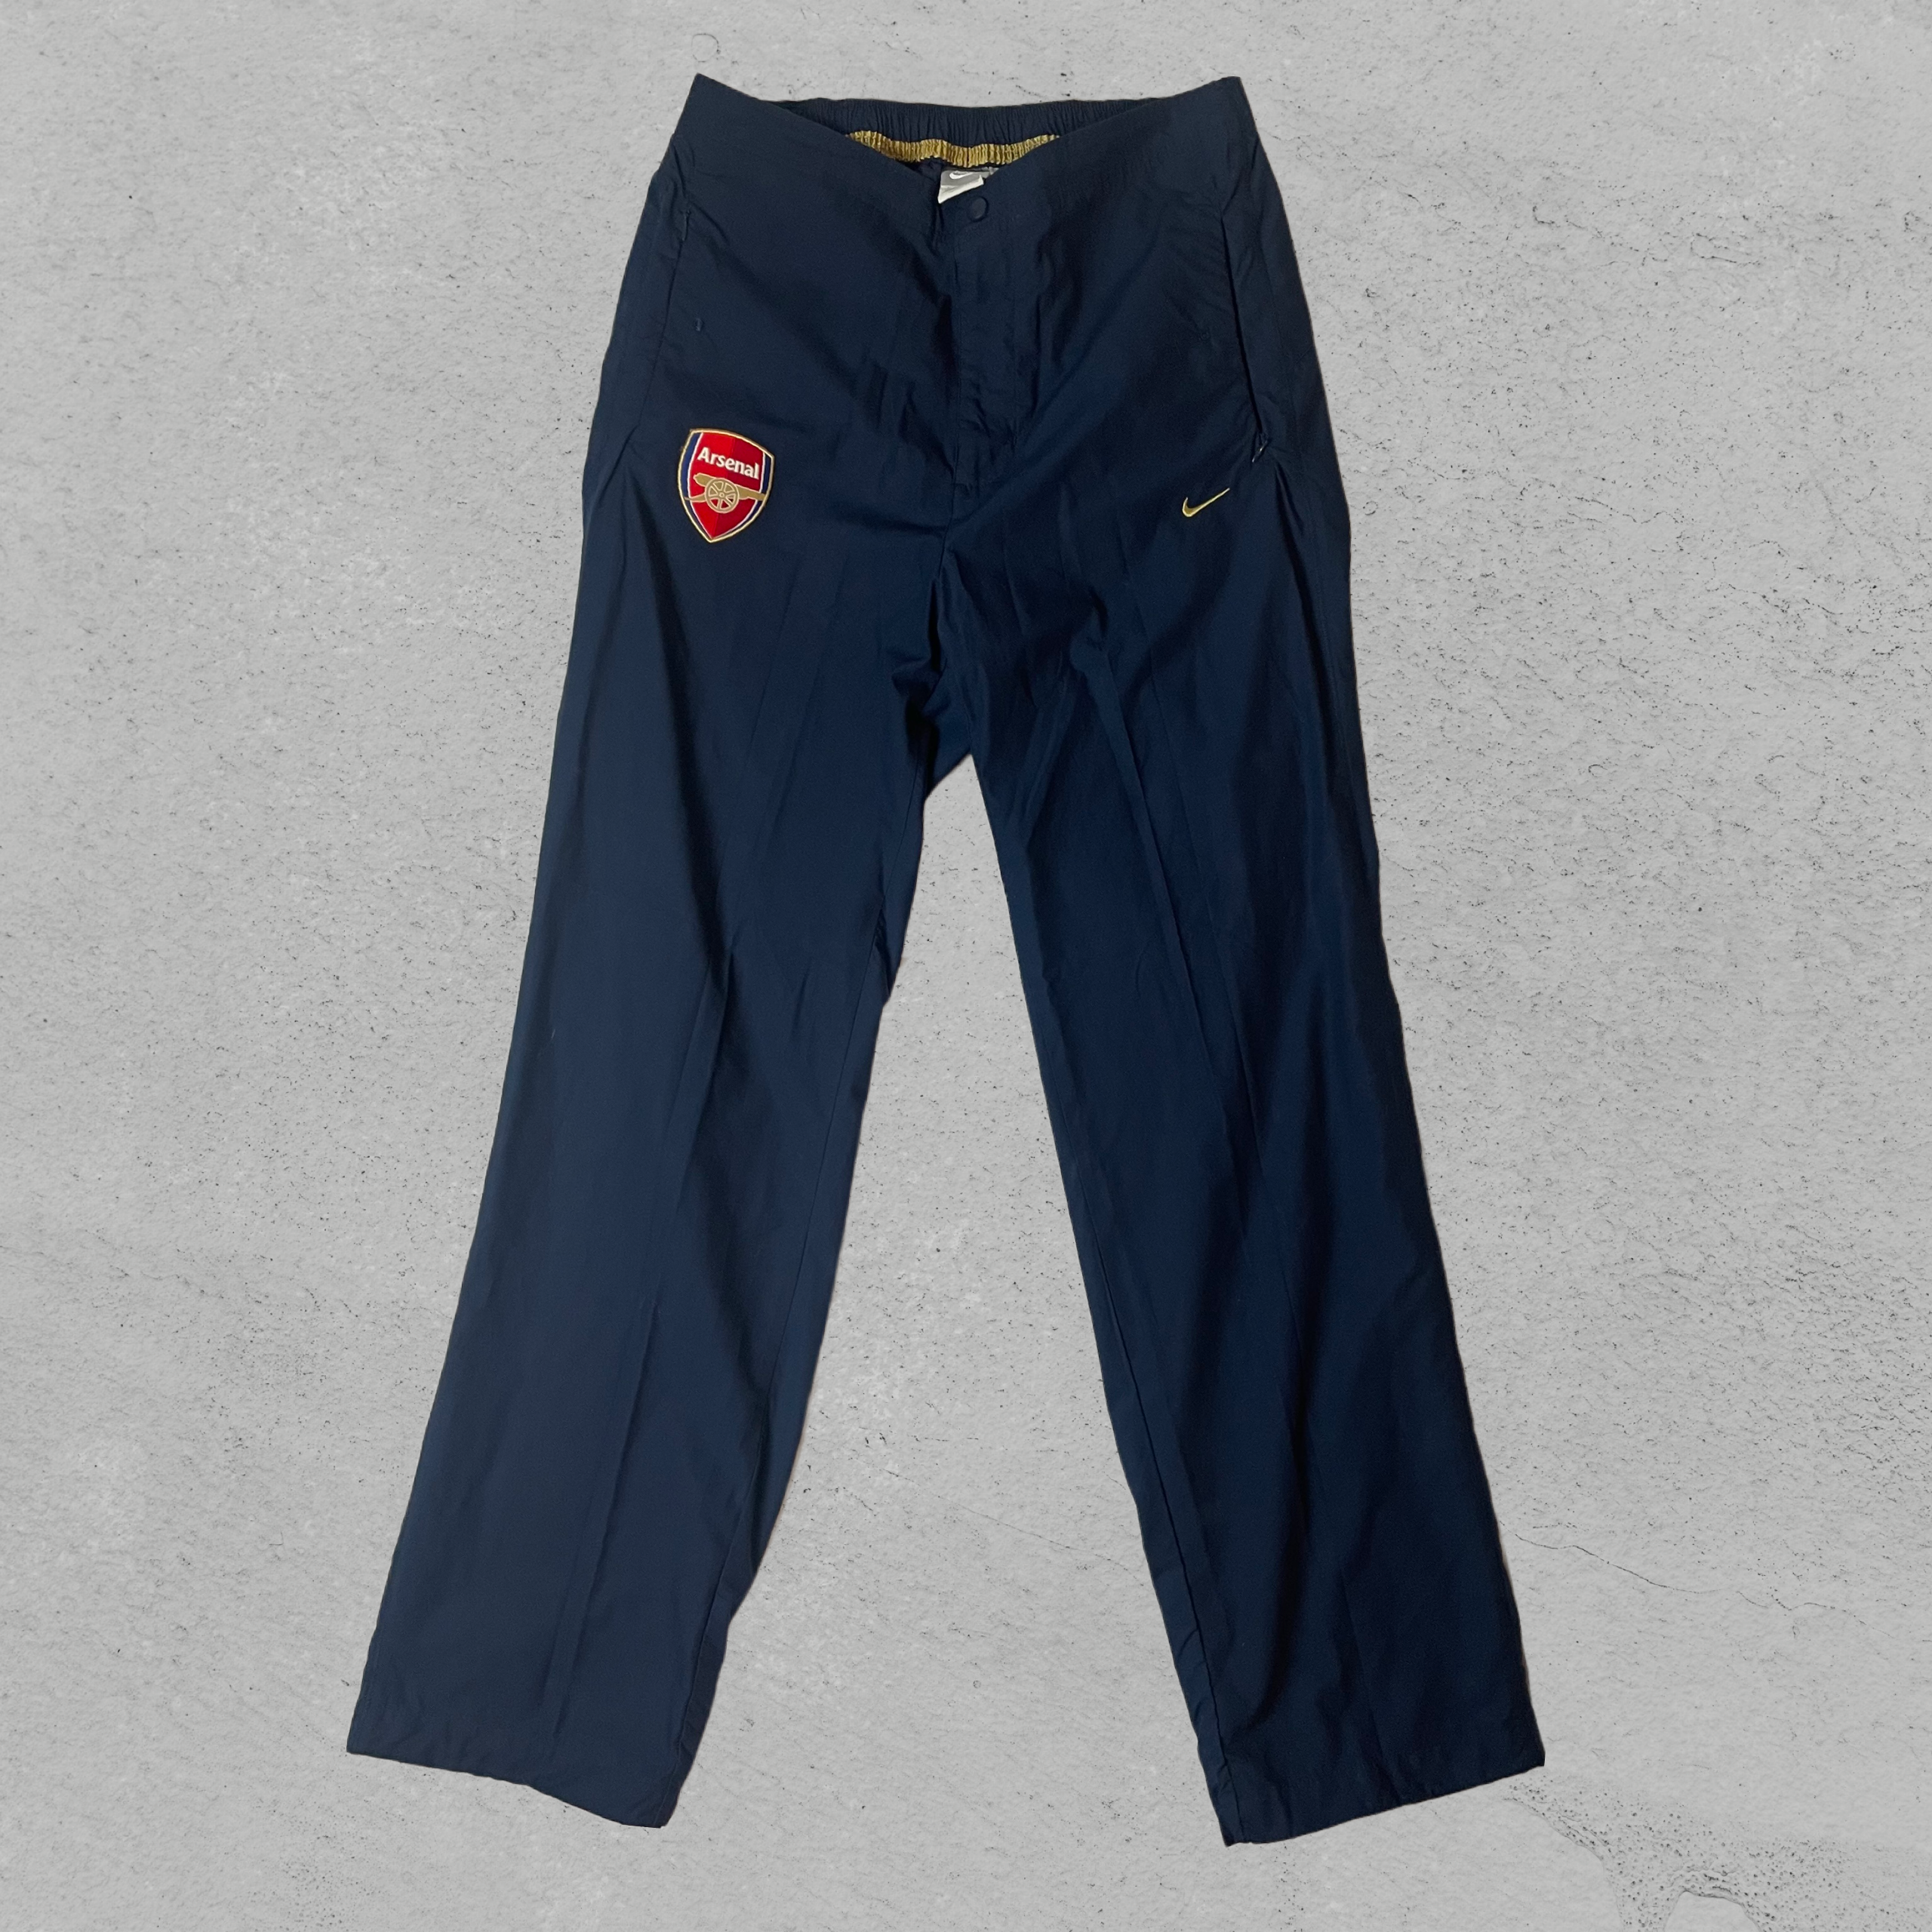 Arsenal FC Mens Lounge Pants Pyjama Bottoms OFFICIAL Football Gift | eBay